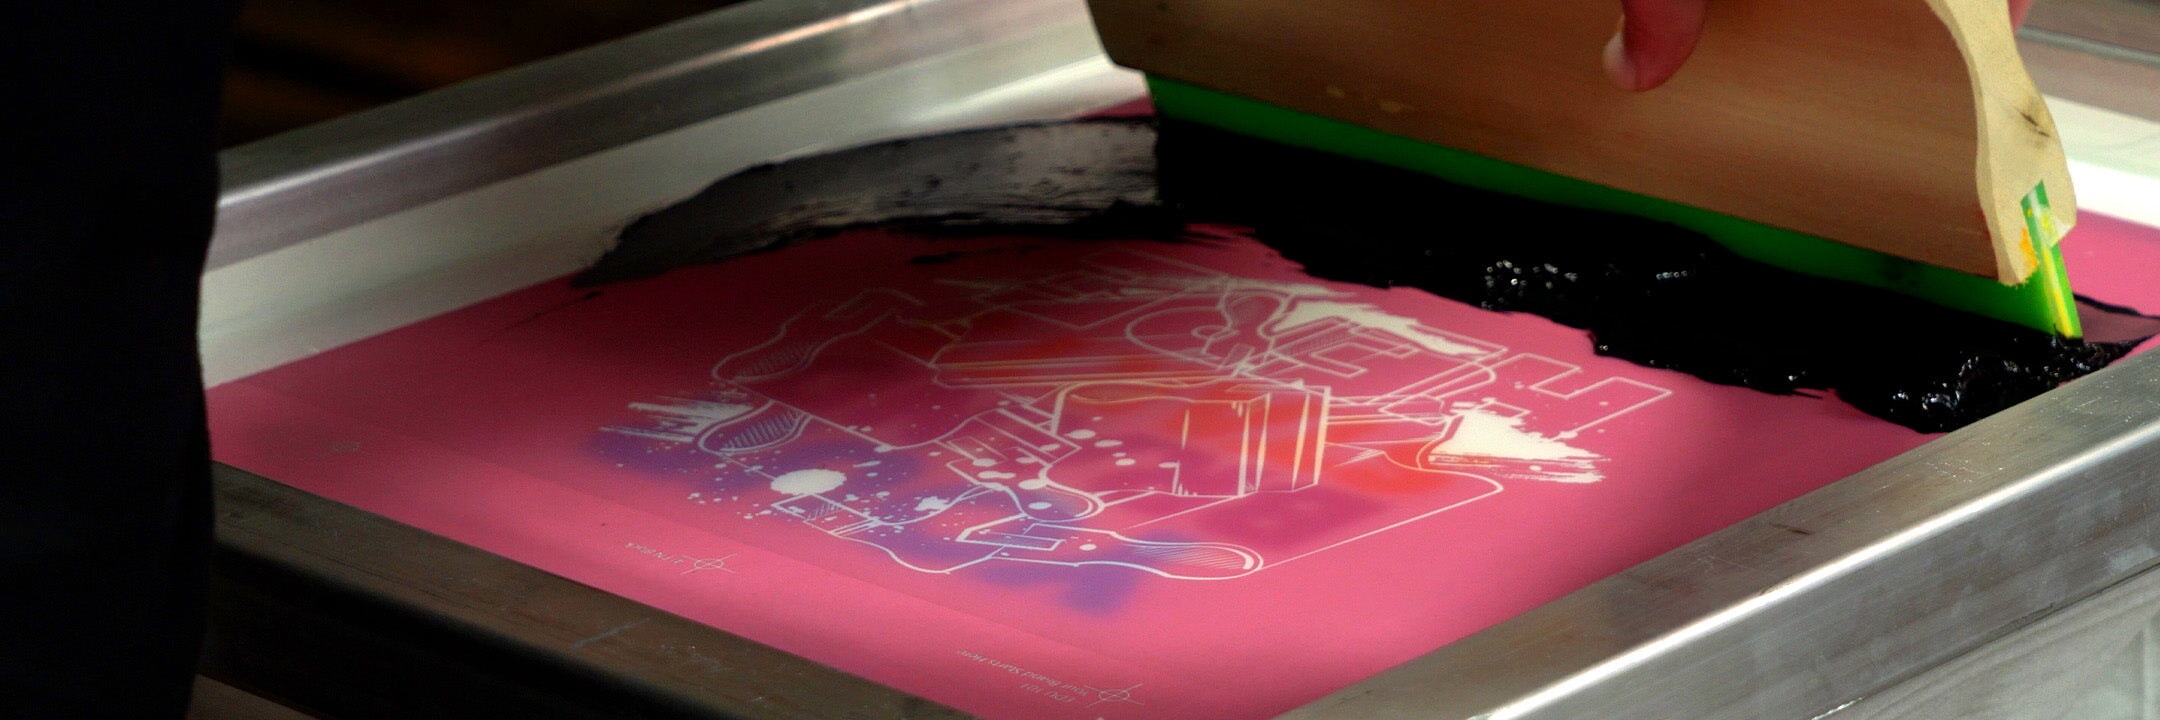 Shirt Printing - Silk Screen - Go Print US